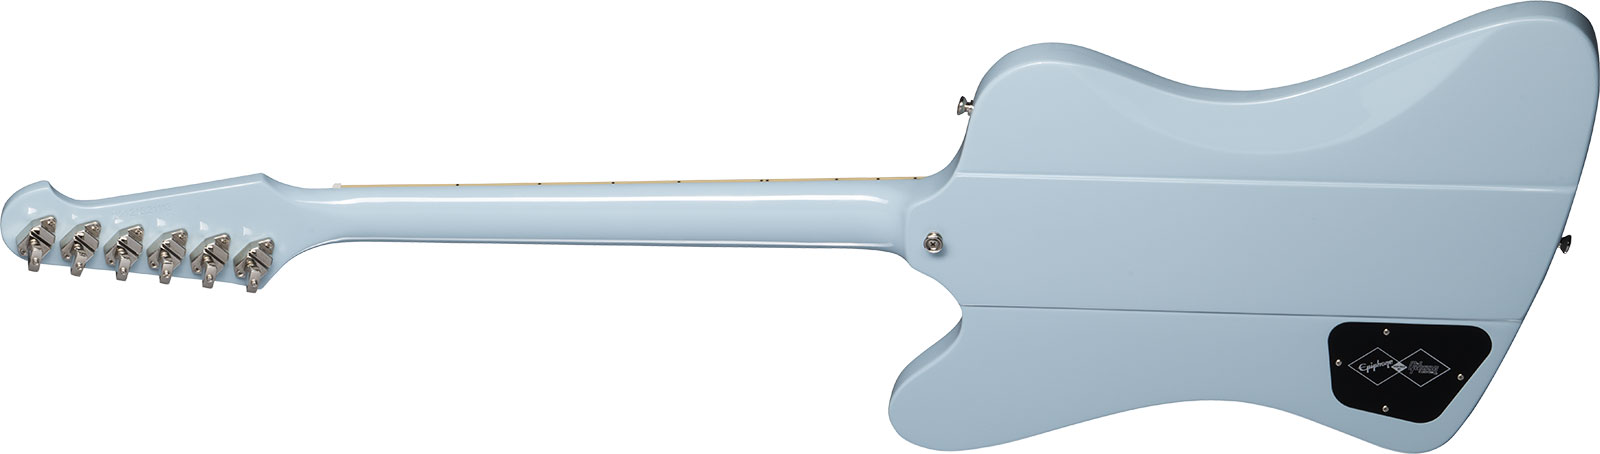 Epiphone Firebird V 1963 Maestro Vibrola Inspired By Gibson Custom 2mh Trem Lau - Frost Blue - Retro rock electric guitar - Variation 1